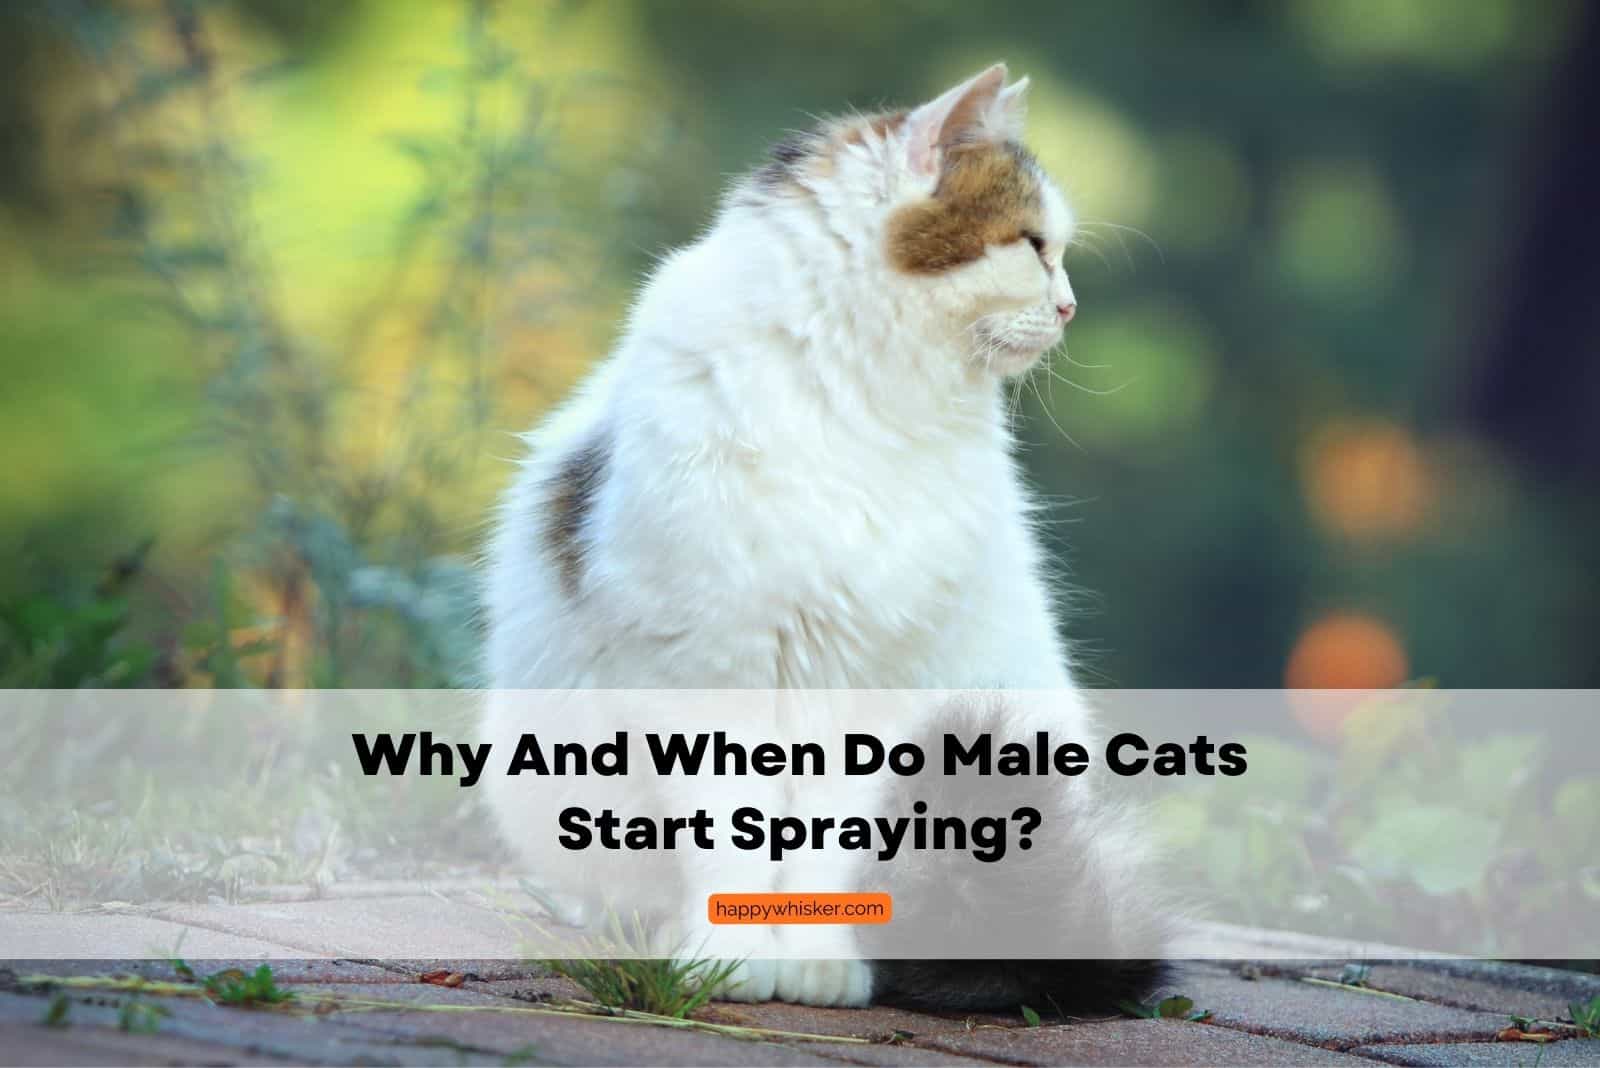 when male cats start spraying